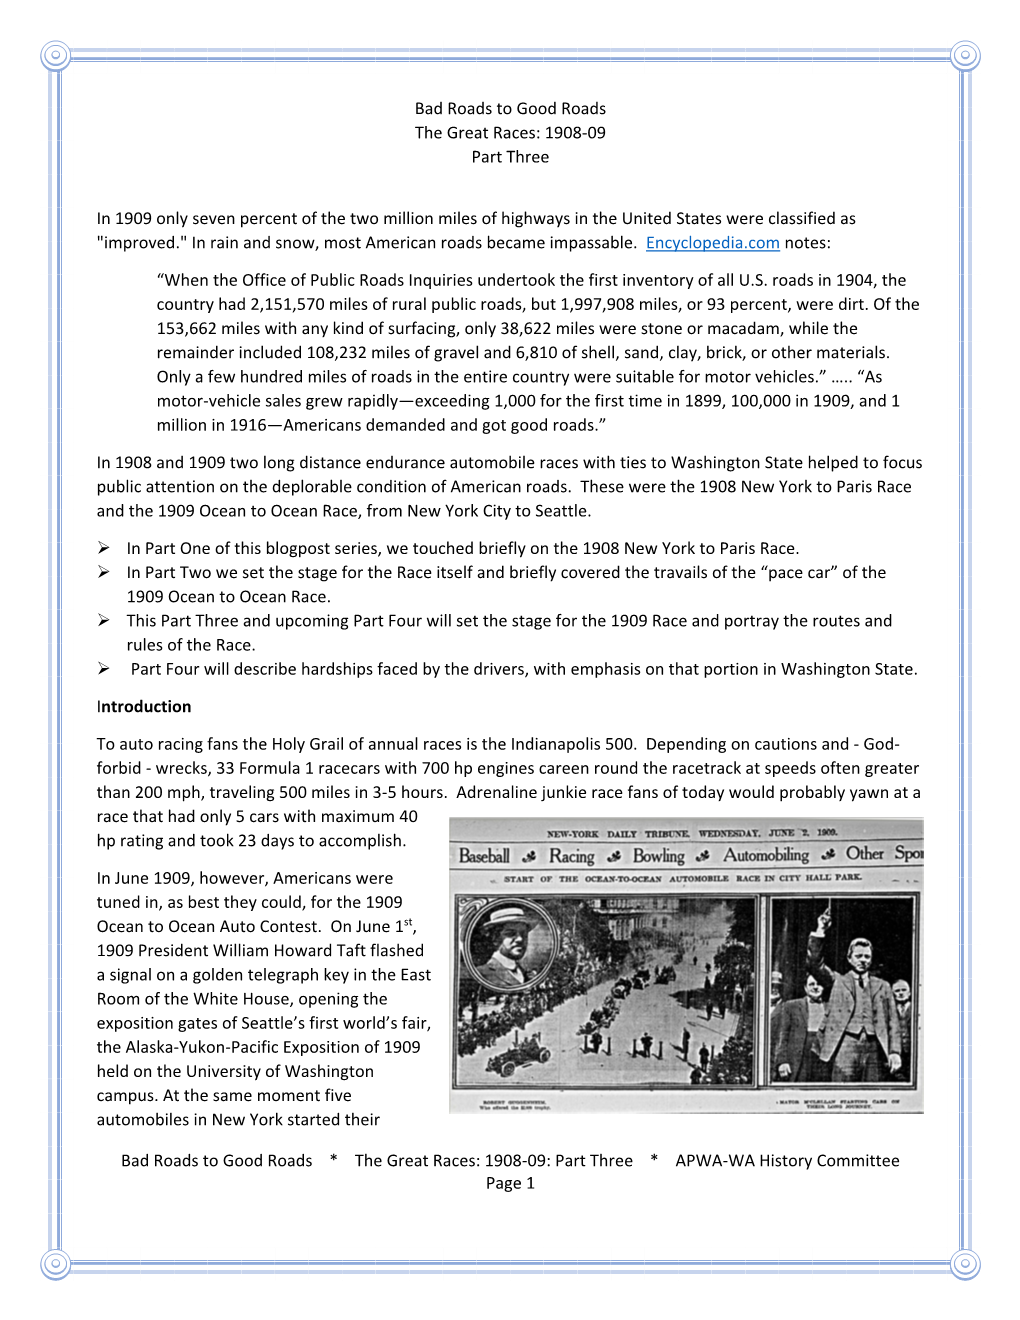 Bad Roads to Good Roads * the Great Races: 1908‐09: Part Three * APWA‐WA History Committee Page 1